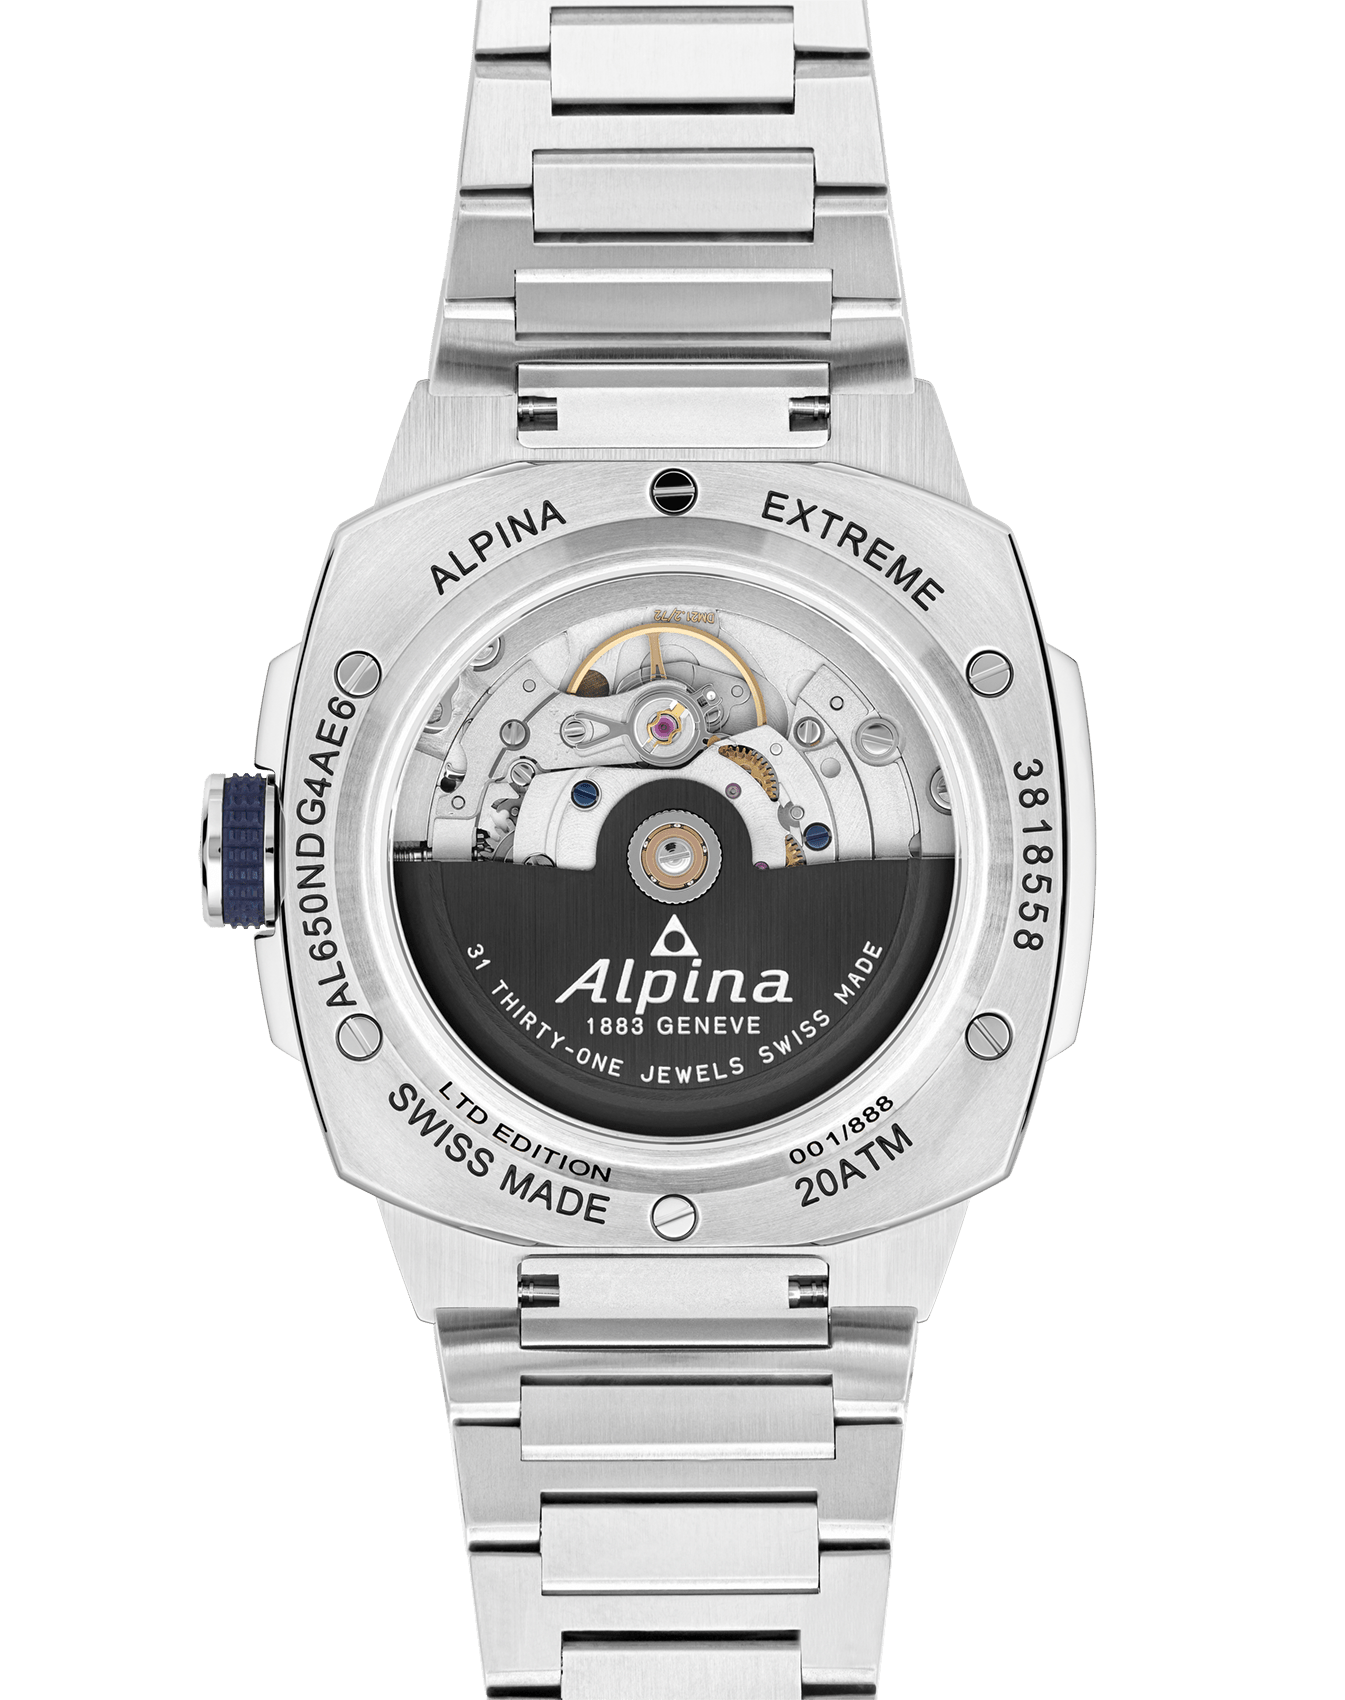 Alpiner Extreme Regulator Automatic - Alpina Watches